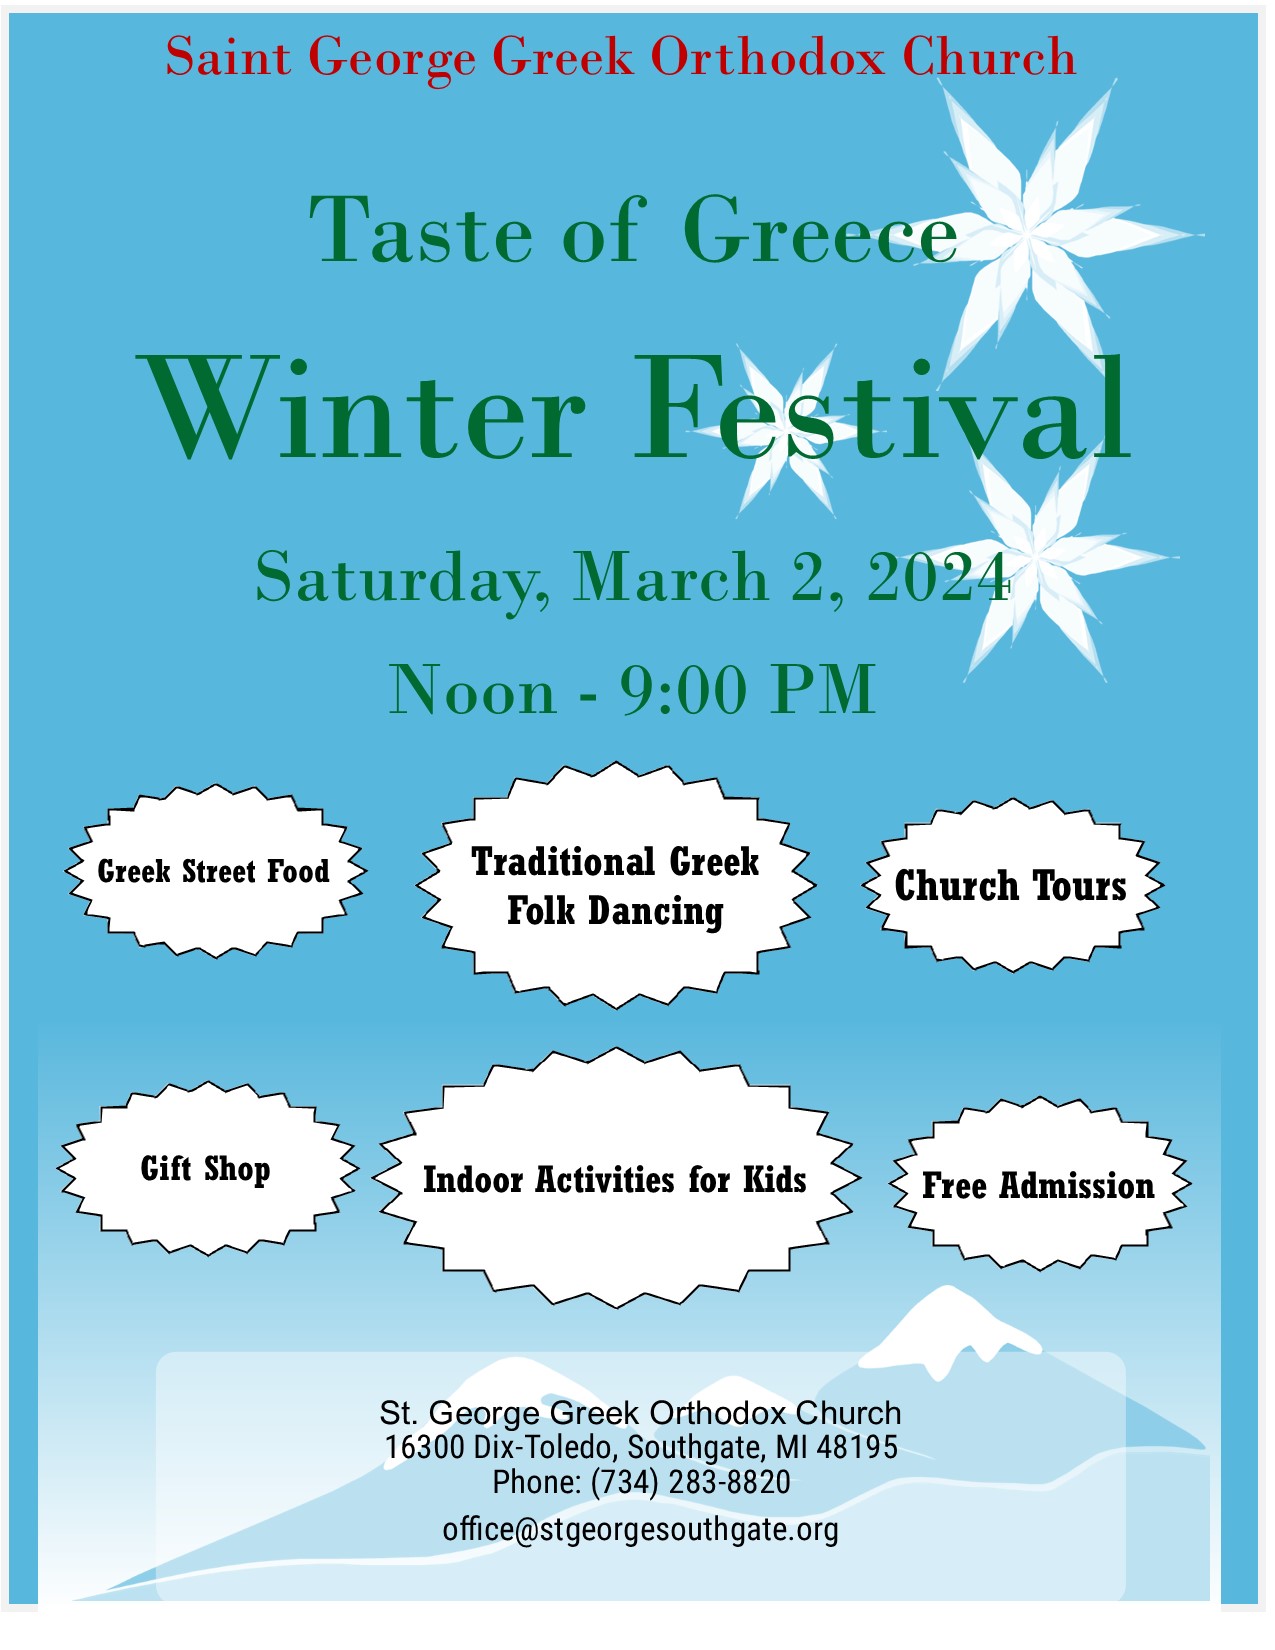 Winter Festival - Taste of Greece